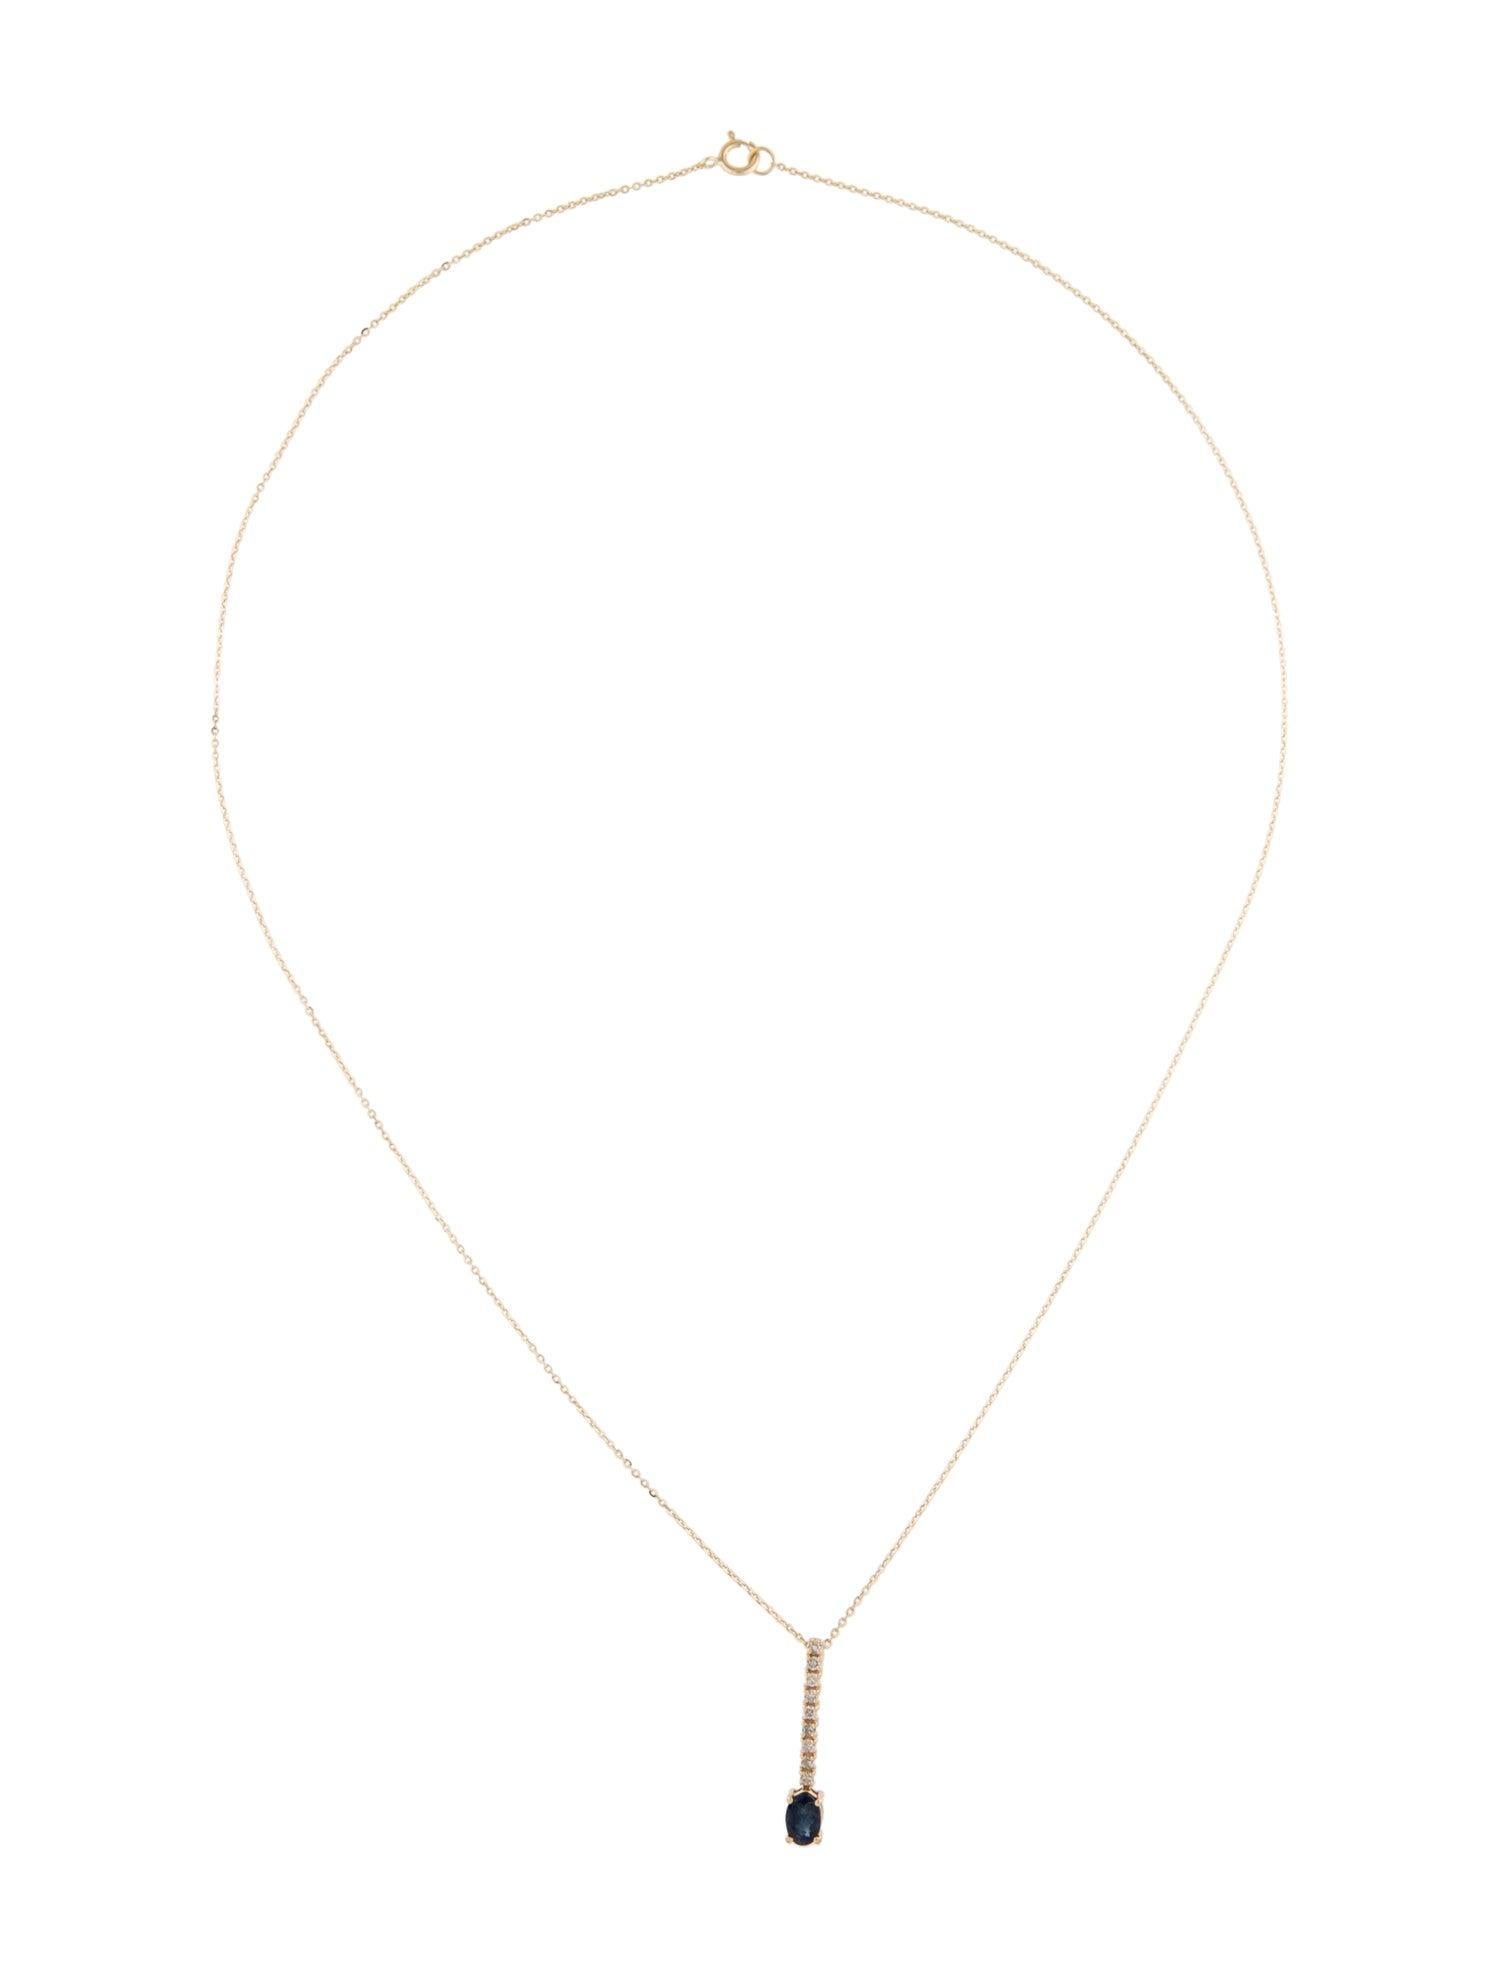 Brilliant Cut Stunning 14K Sapphire & Diamond Pendant Necklace - Elegant Gemstone Sparkle For Sale